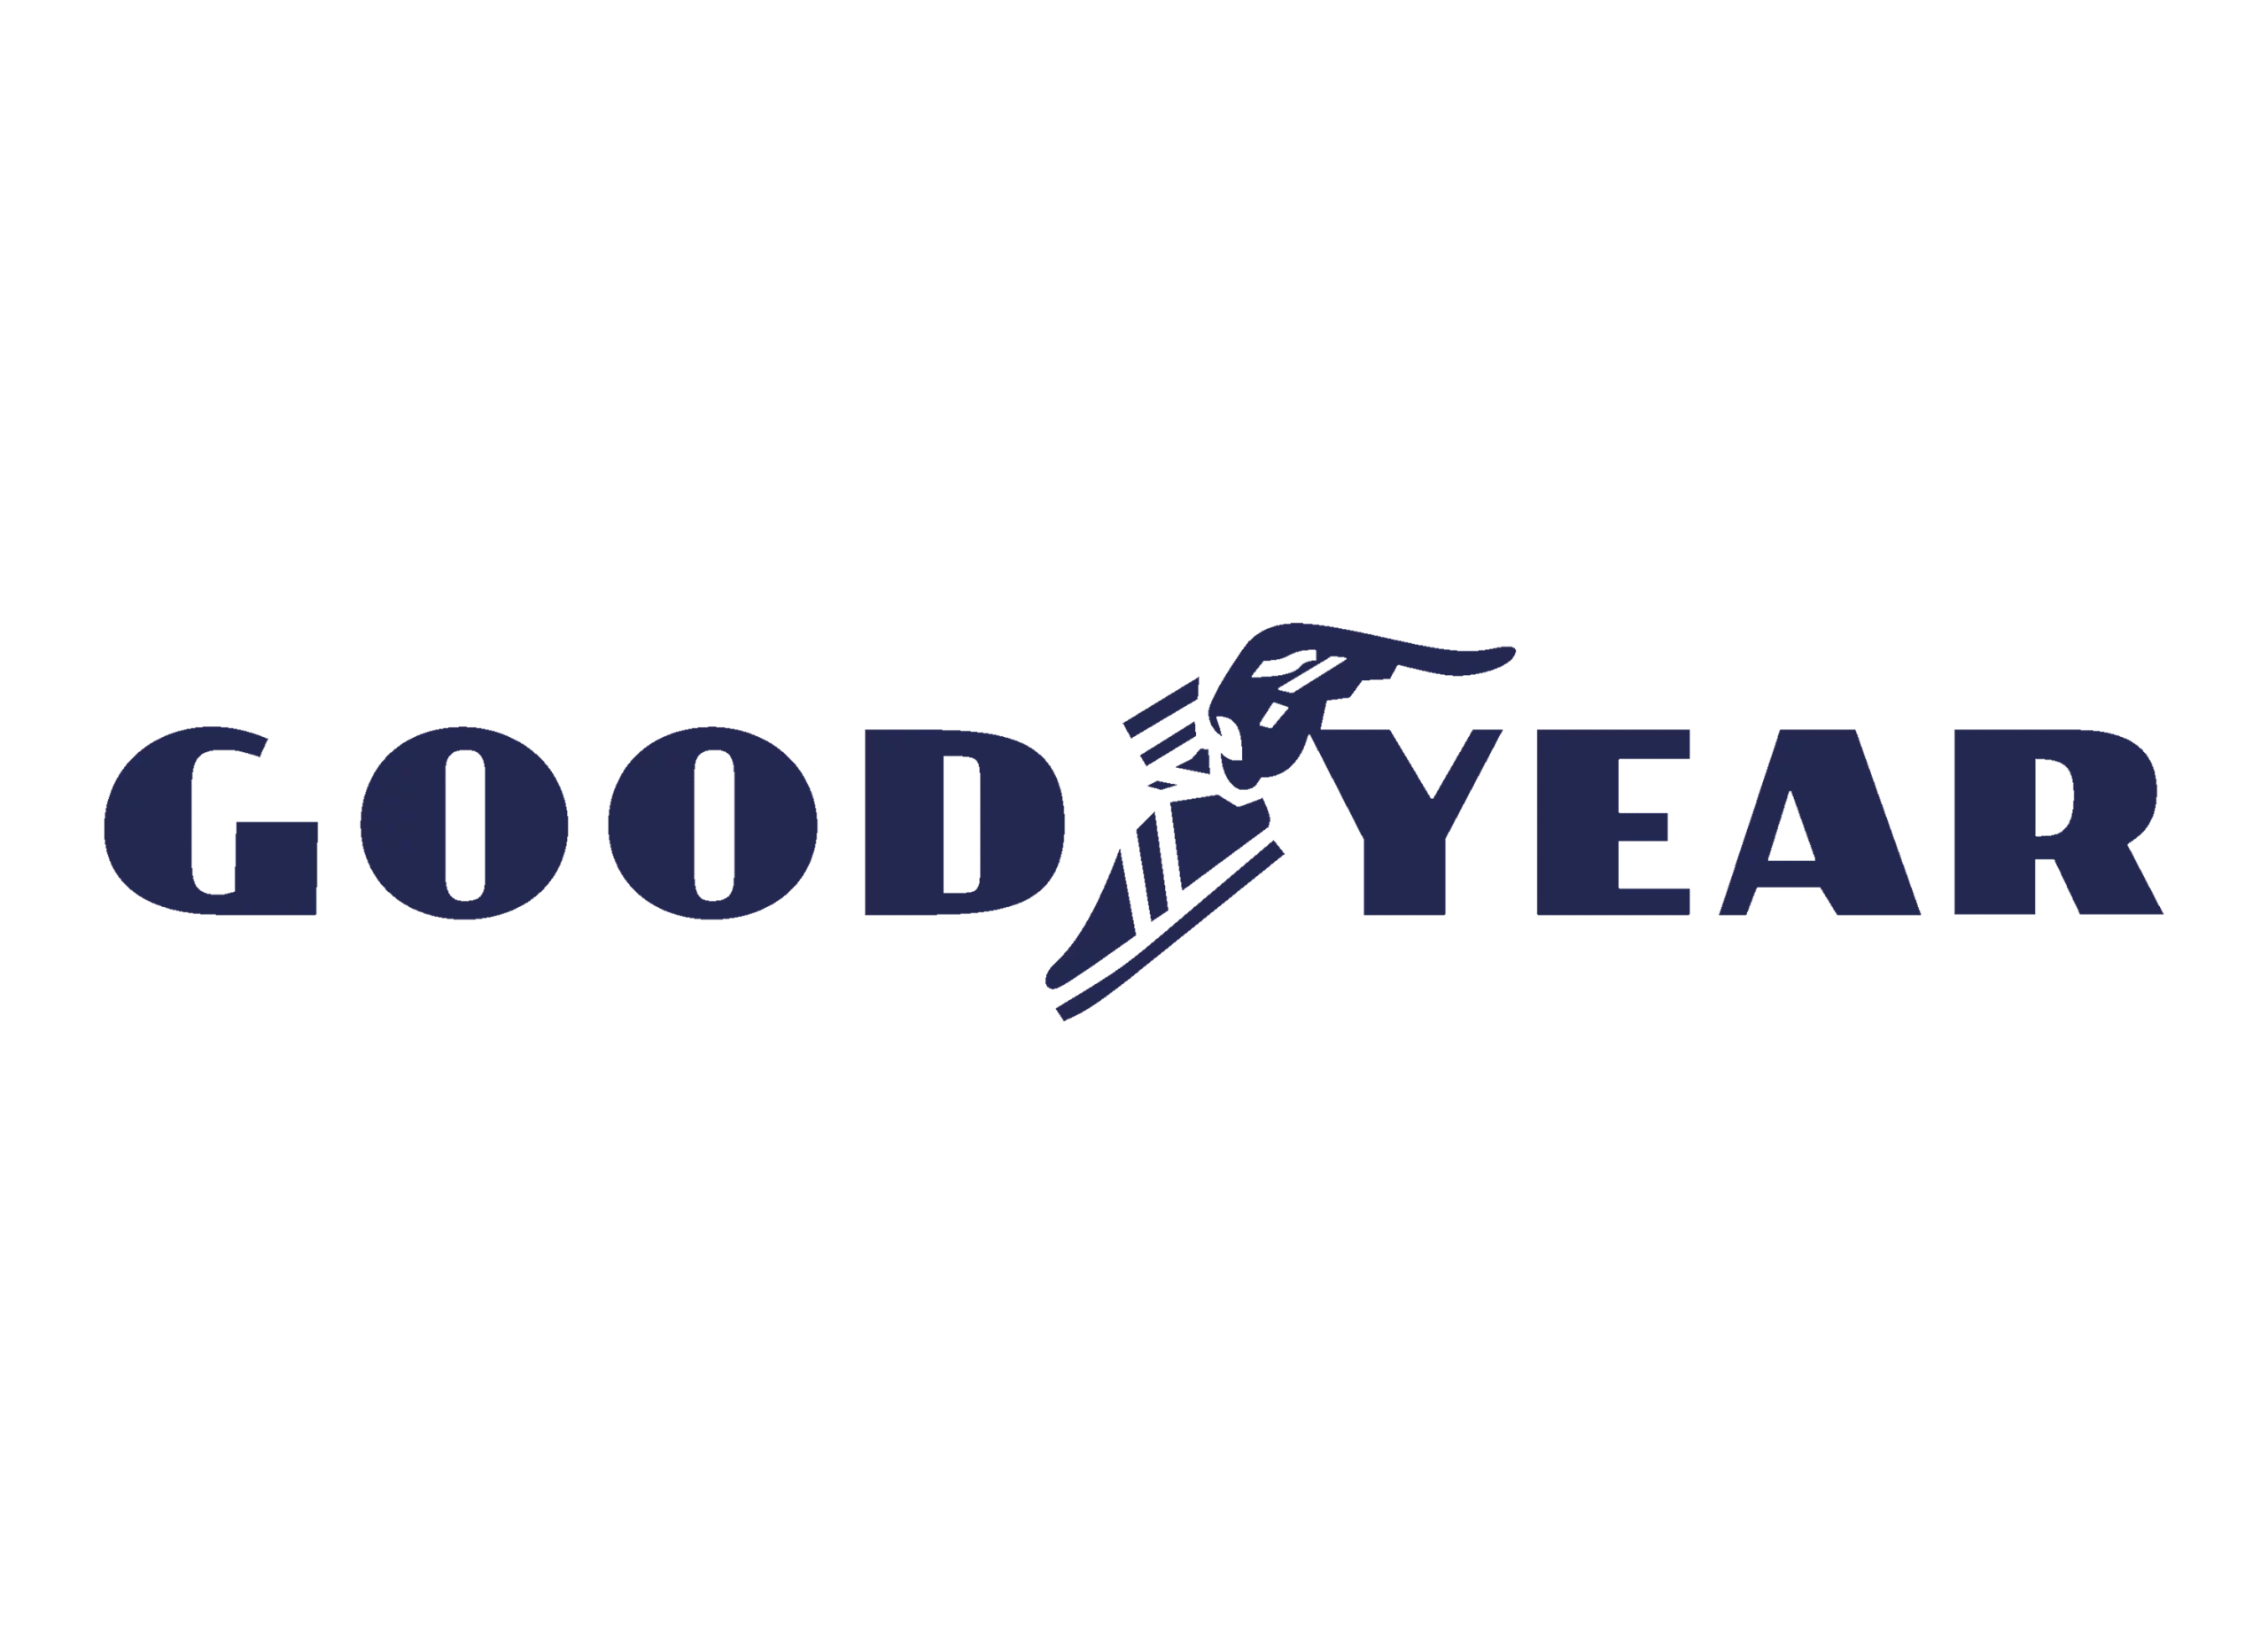 Goodyear logo 1942-1968